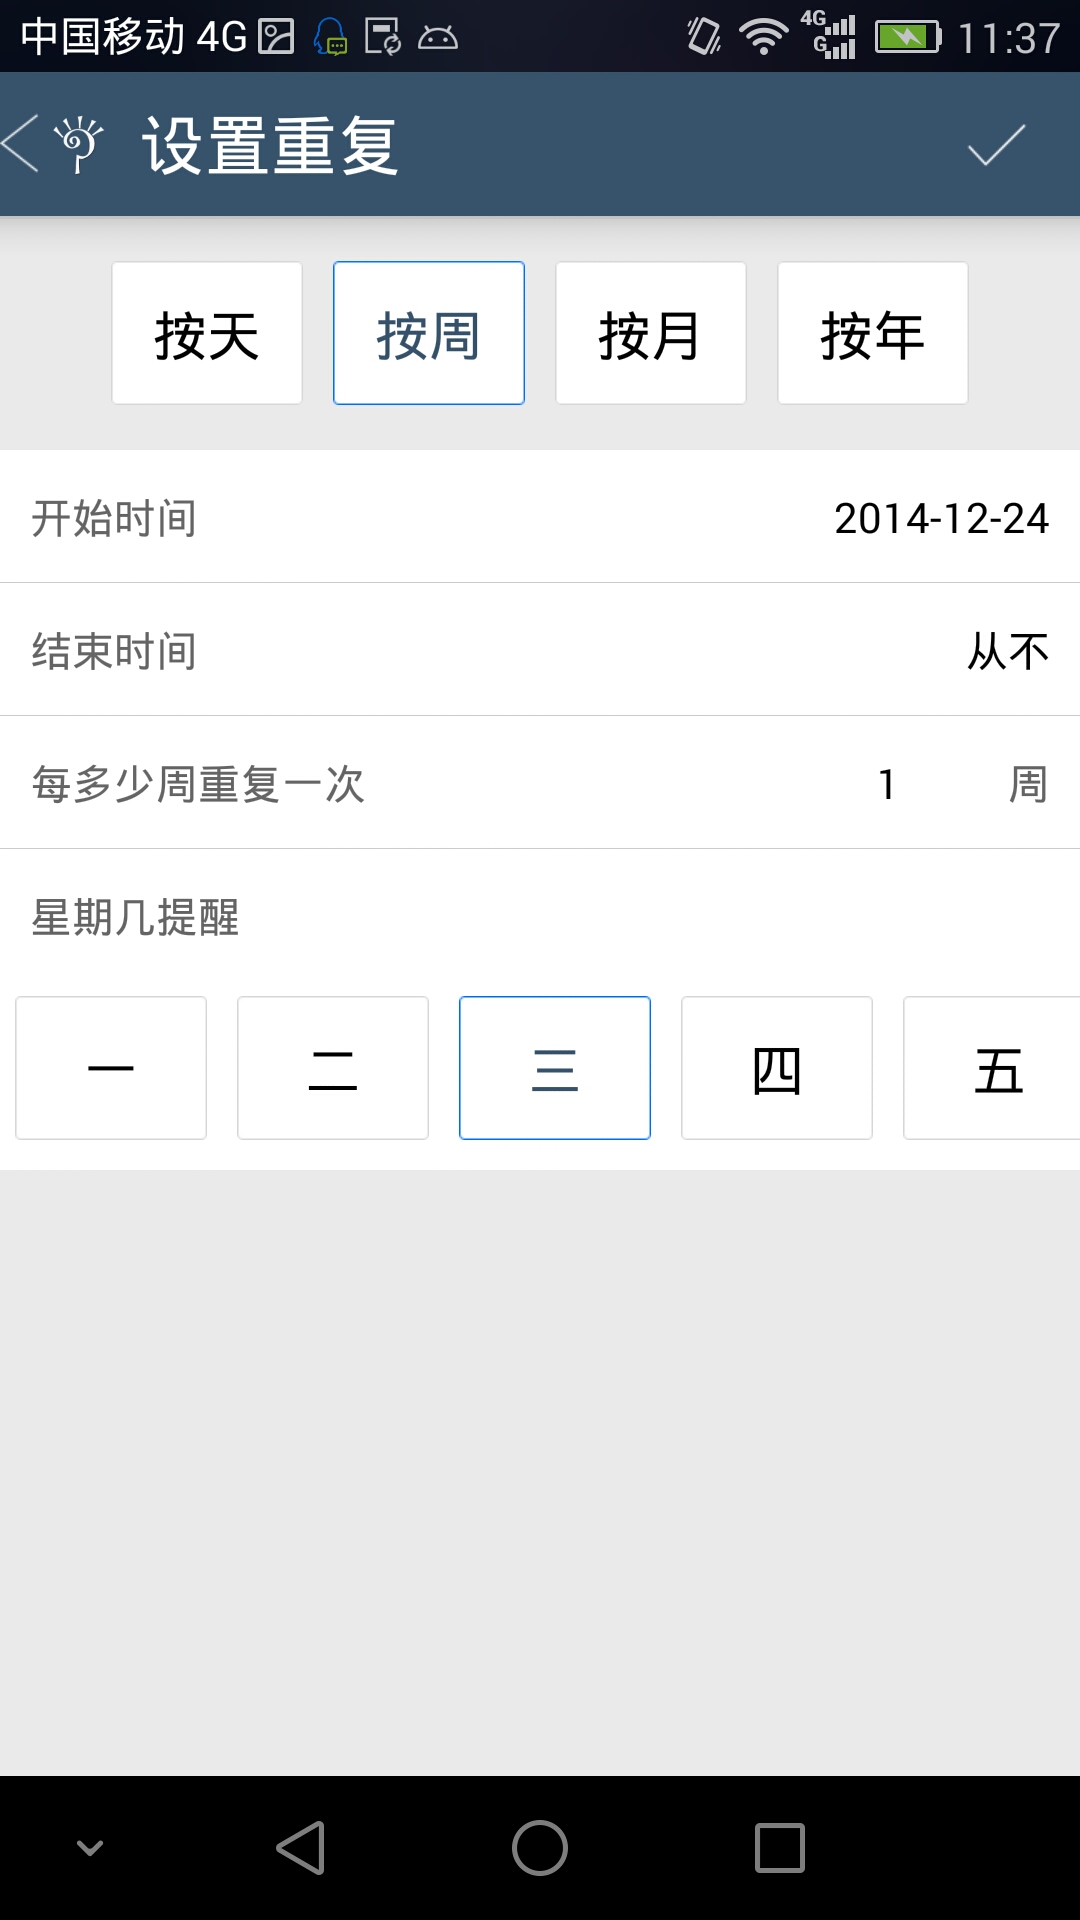 Screenshot 2014 12 22 11 37 27